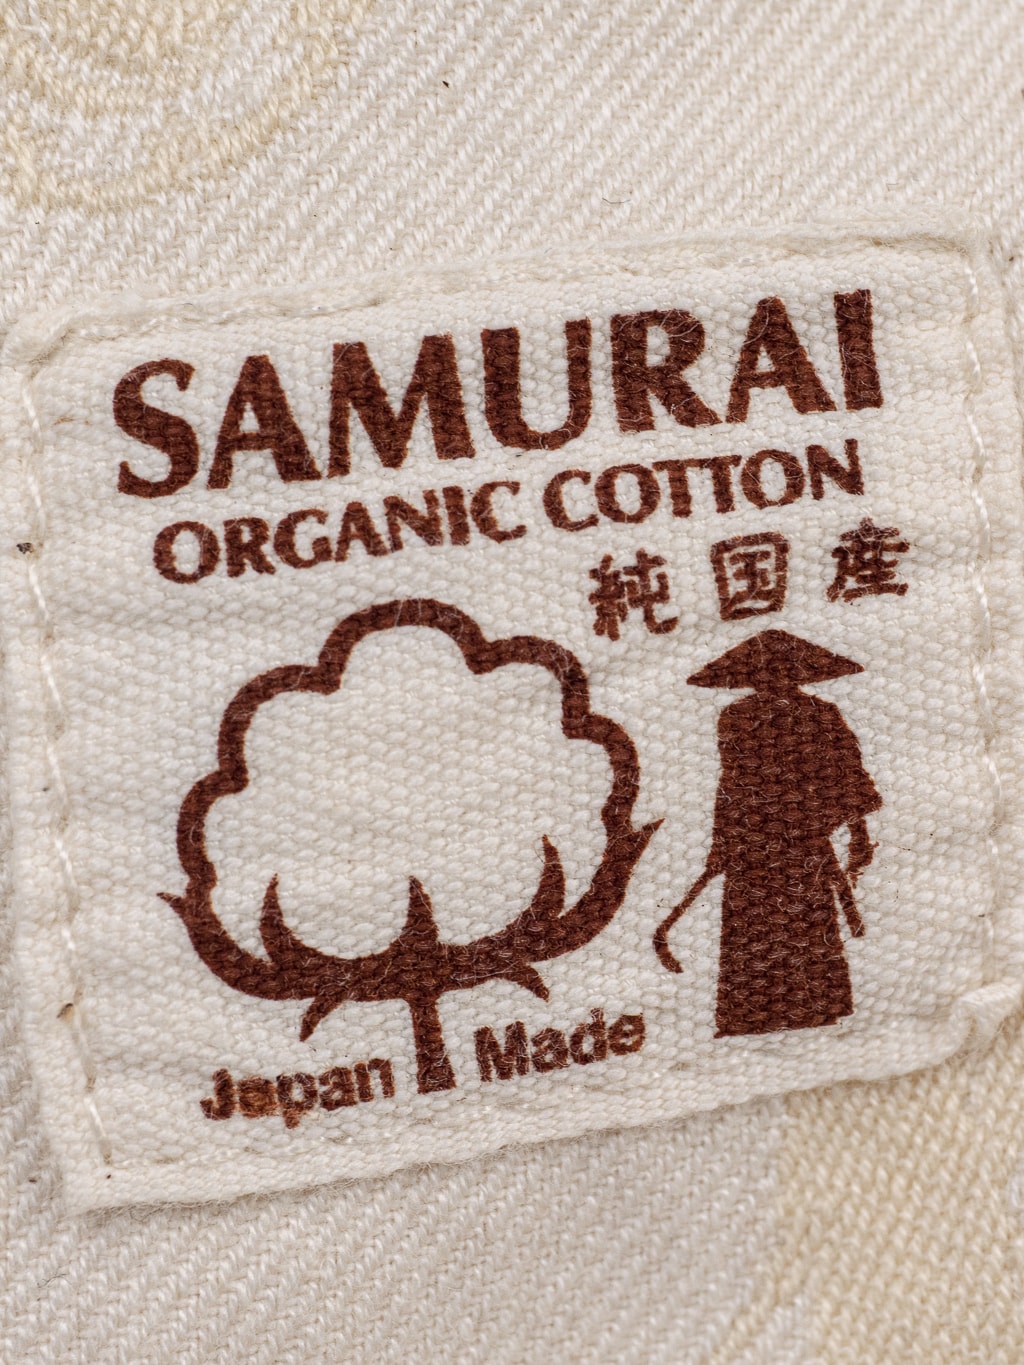 Samurai Jeans Japanese Cotton Ecru Jeans slim straight interior brand tag